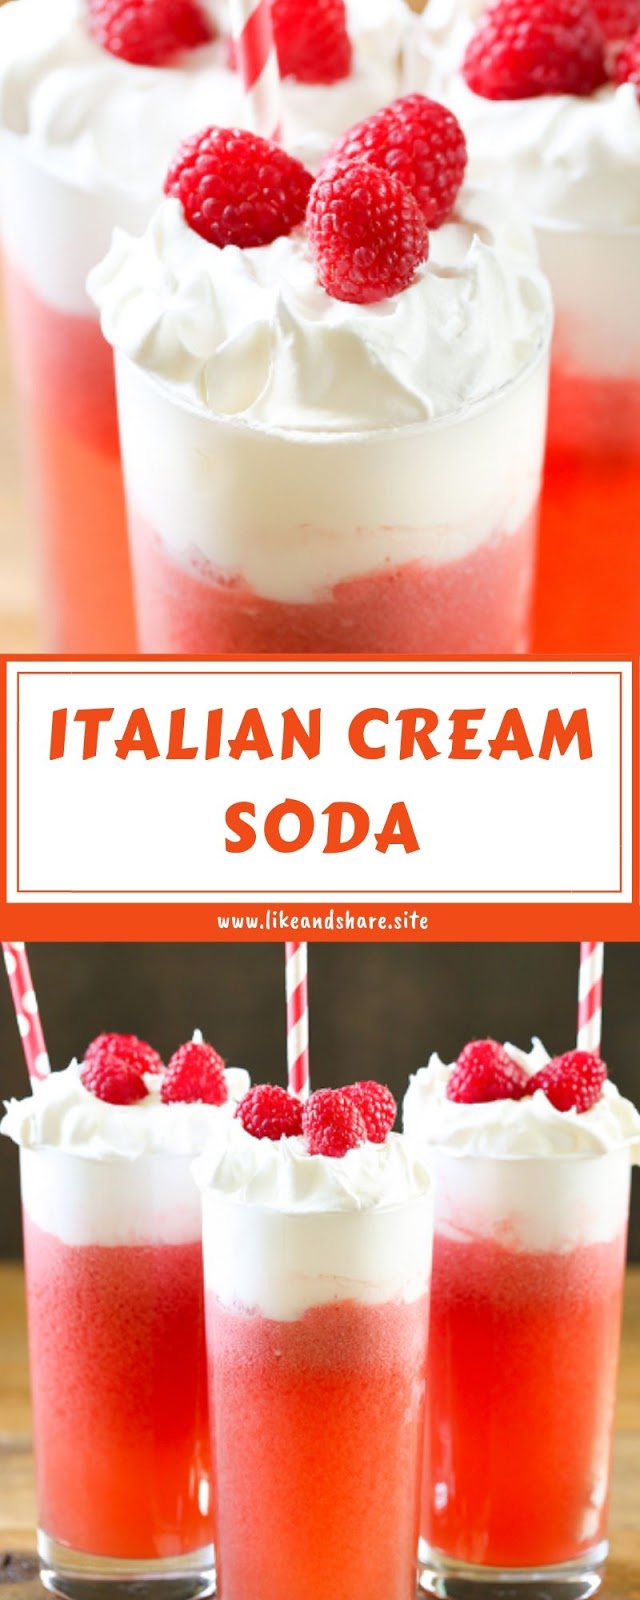 ITALIAN CREAM SODA